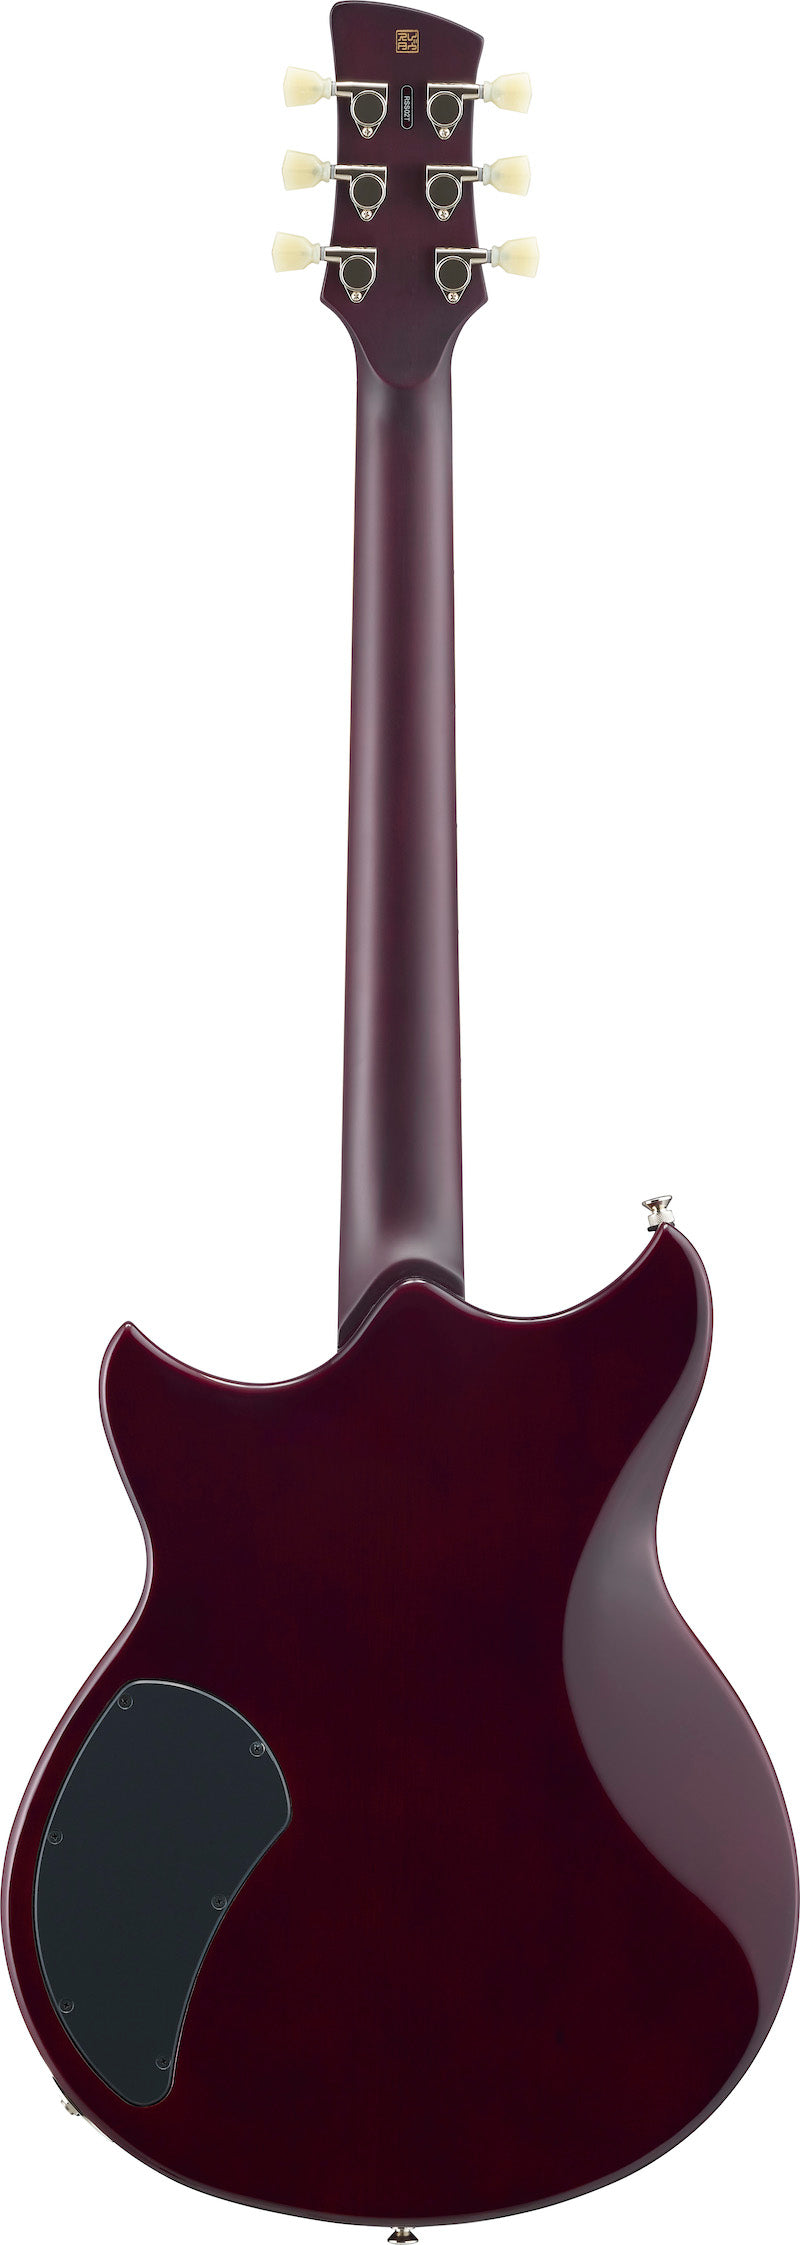 Yamaha Revstar RSS02T SSB Electric Guitar - Sunset Burst - A